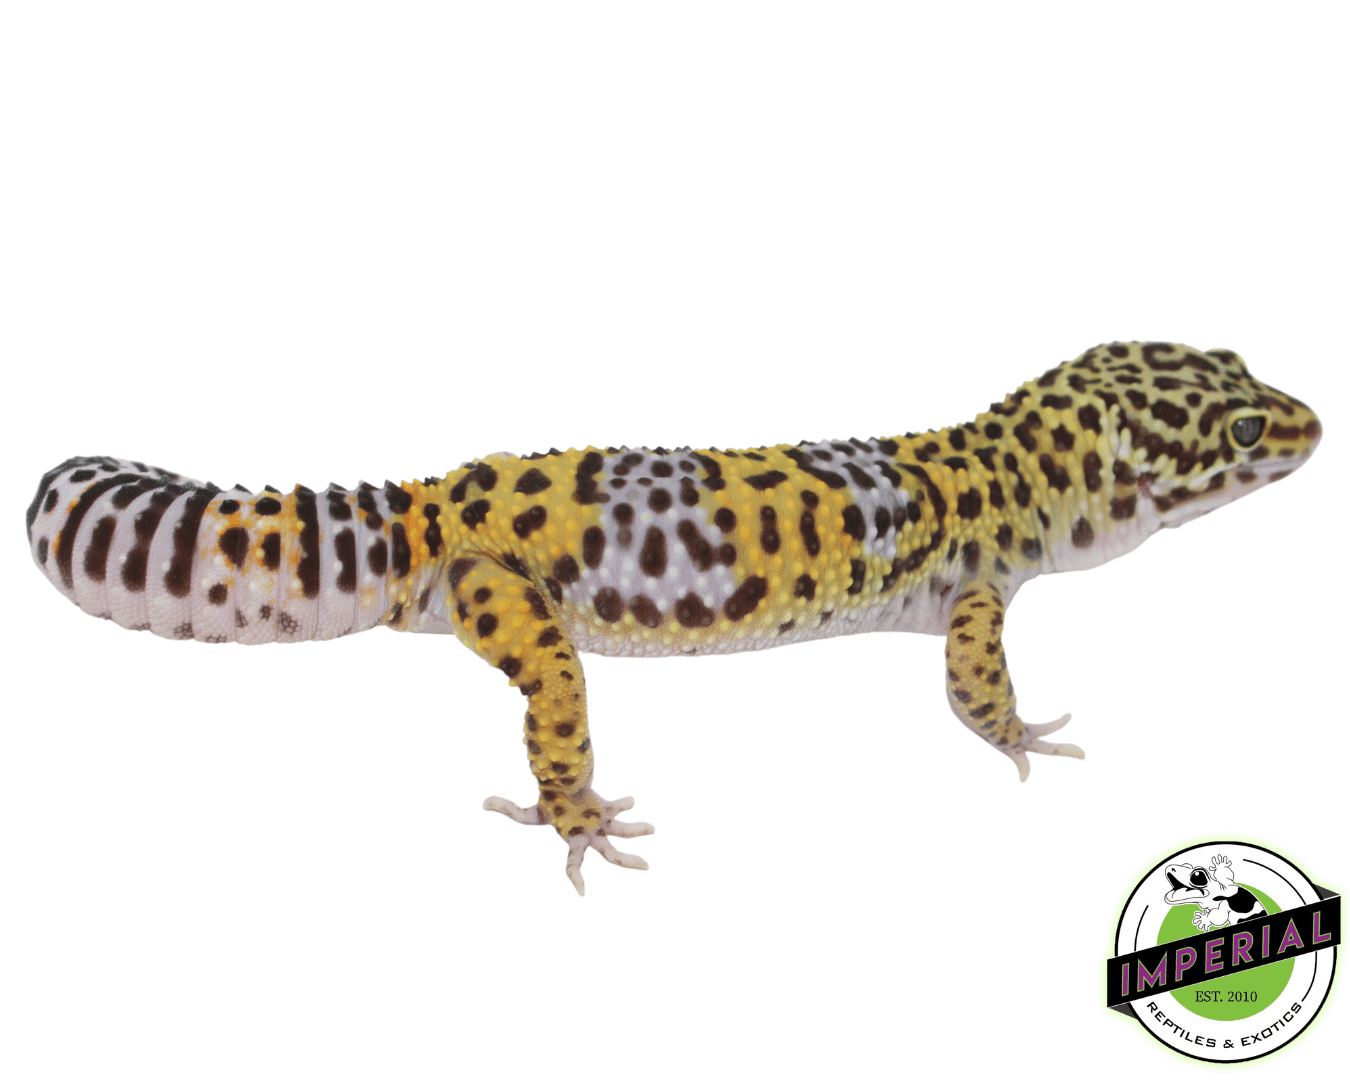 ph rainwater bae leopard gecko for sale, buy reptiles online